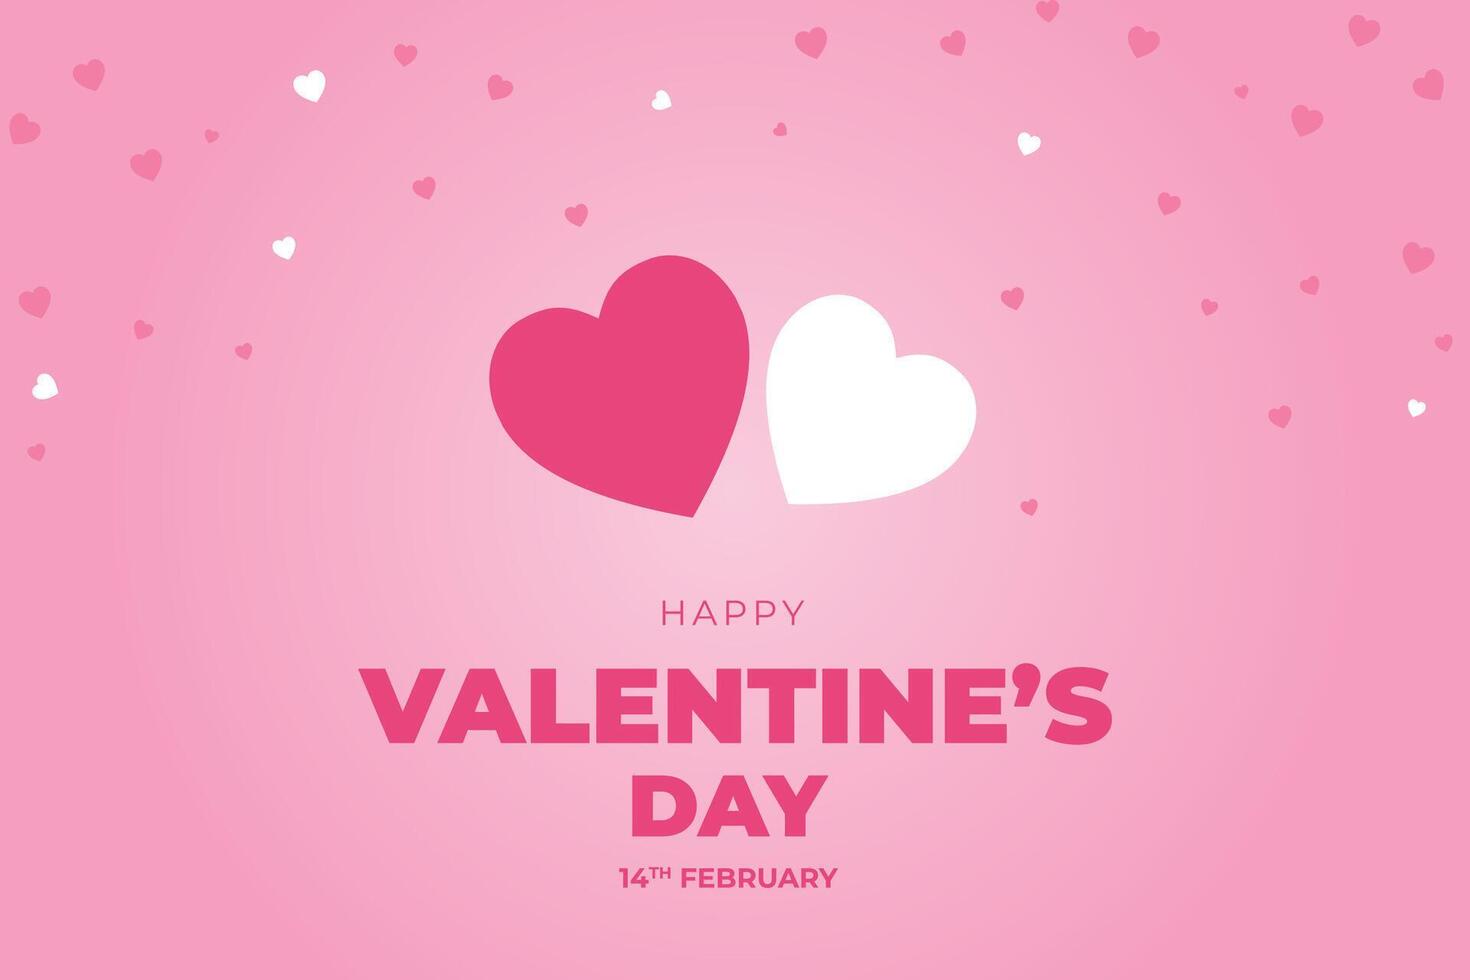 Happy Valentine's Day, Valentine's Day hearts background. vector